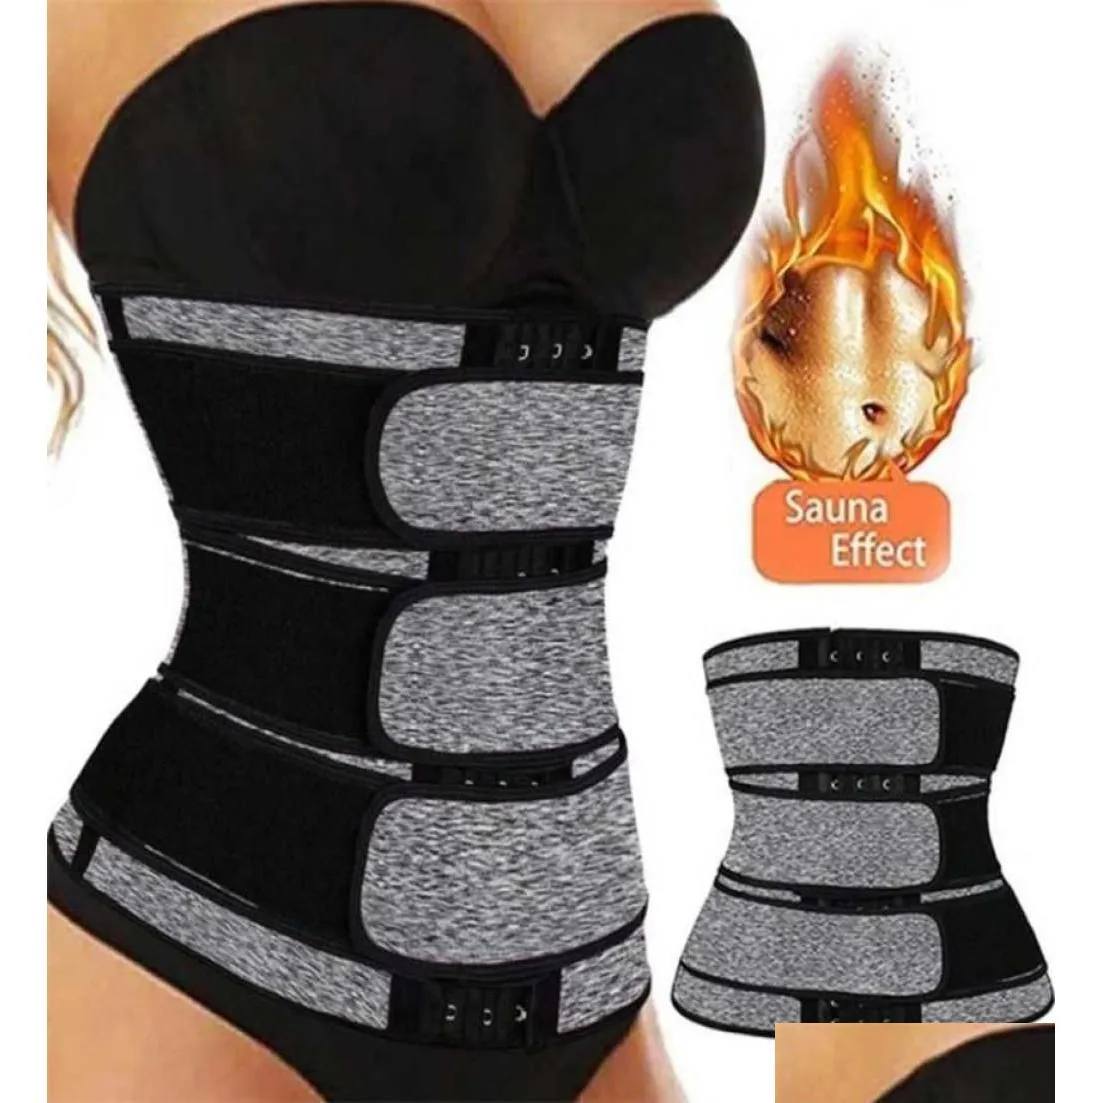 bullpiano shaperwear waist trainer neoprene belt cincher body shaper tummy control strap fitness fat burning 2201155131137